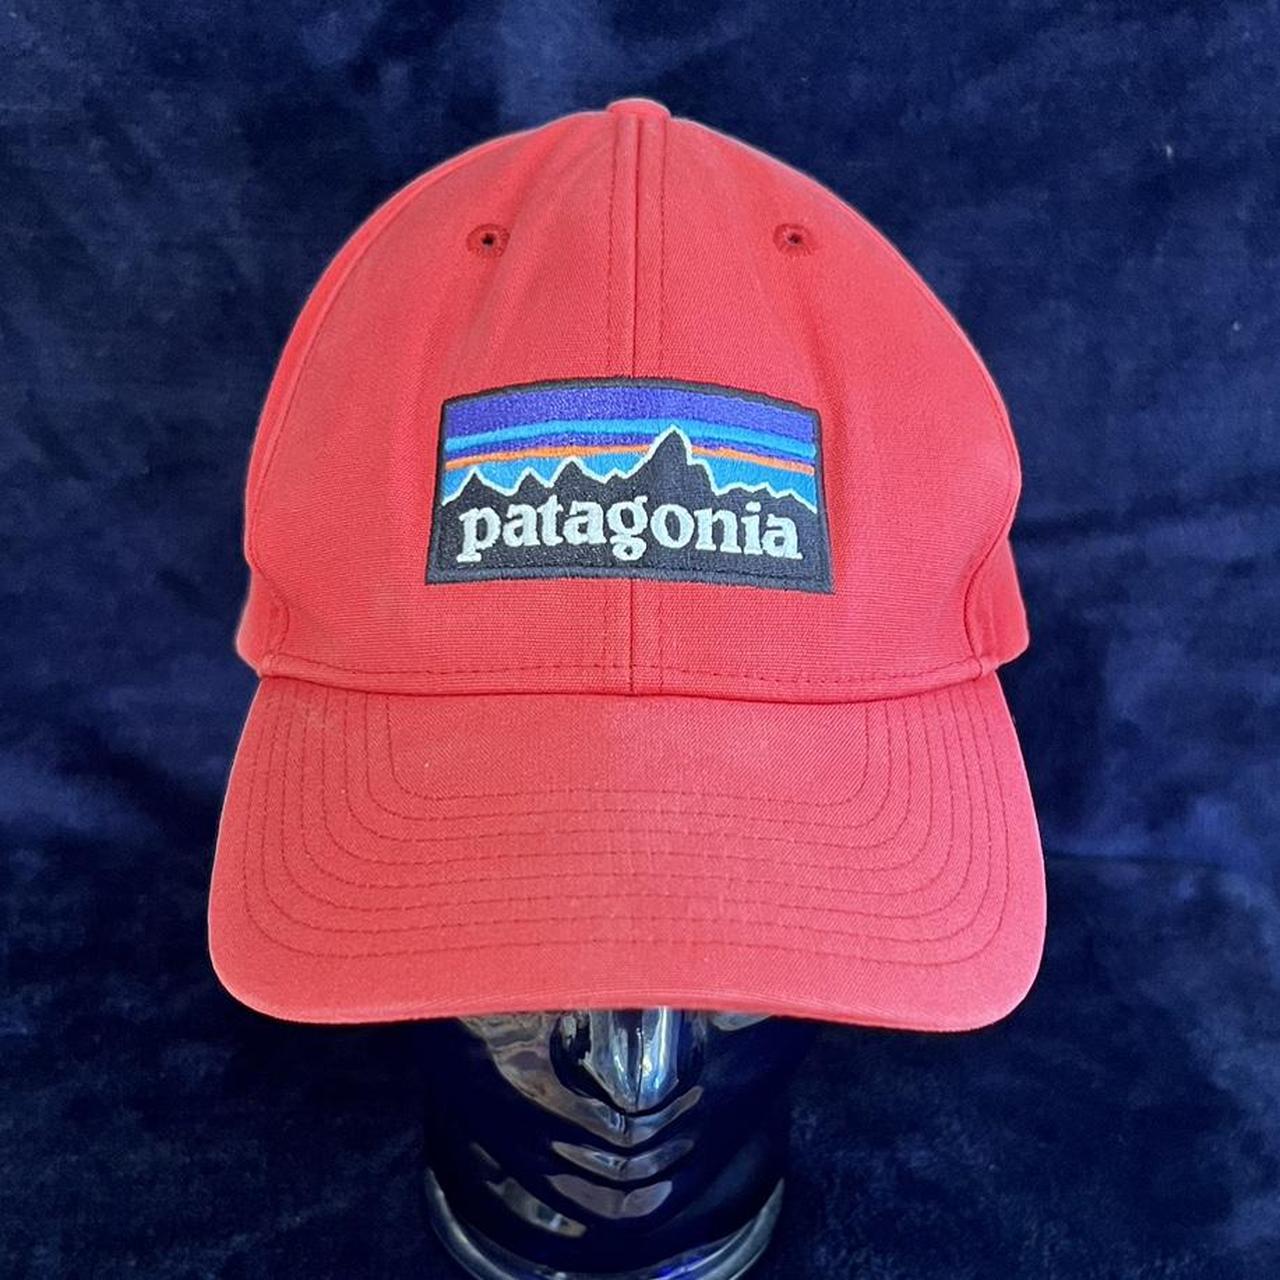  Vintage Patagonia SnapBack hat, - red, - slight